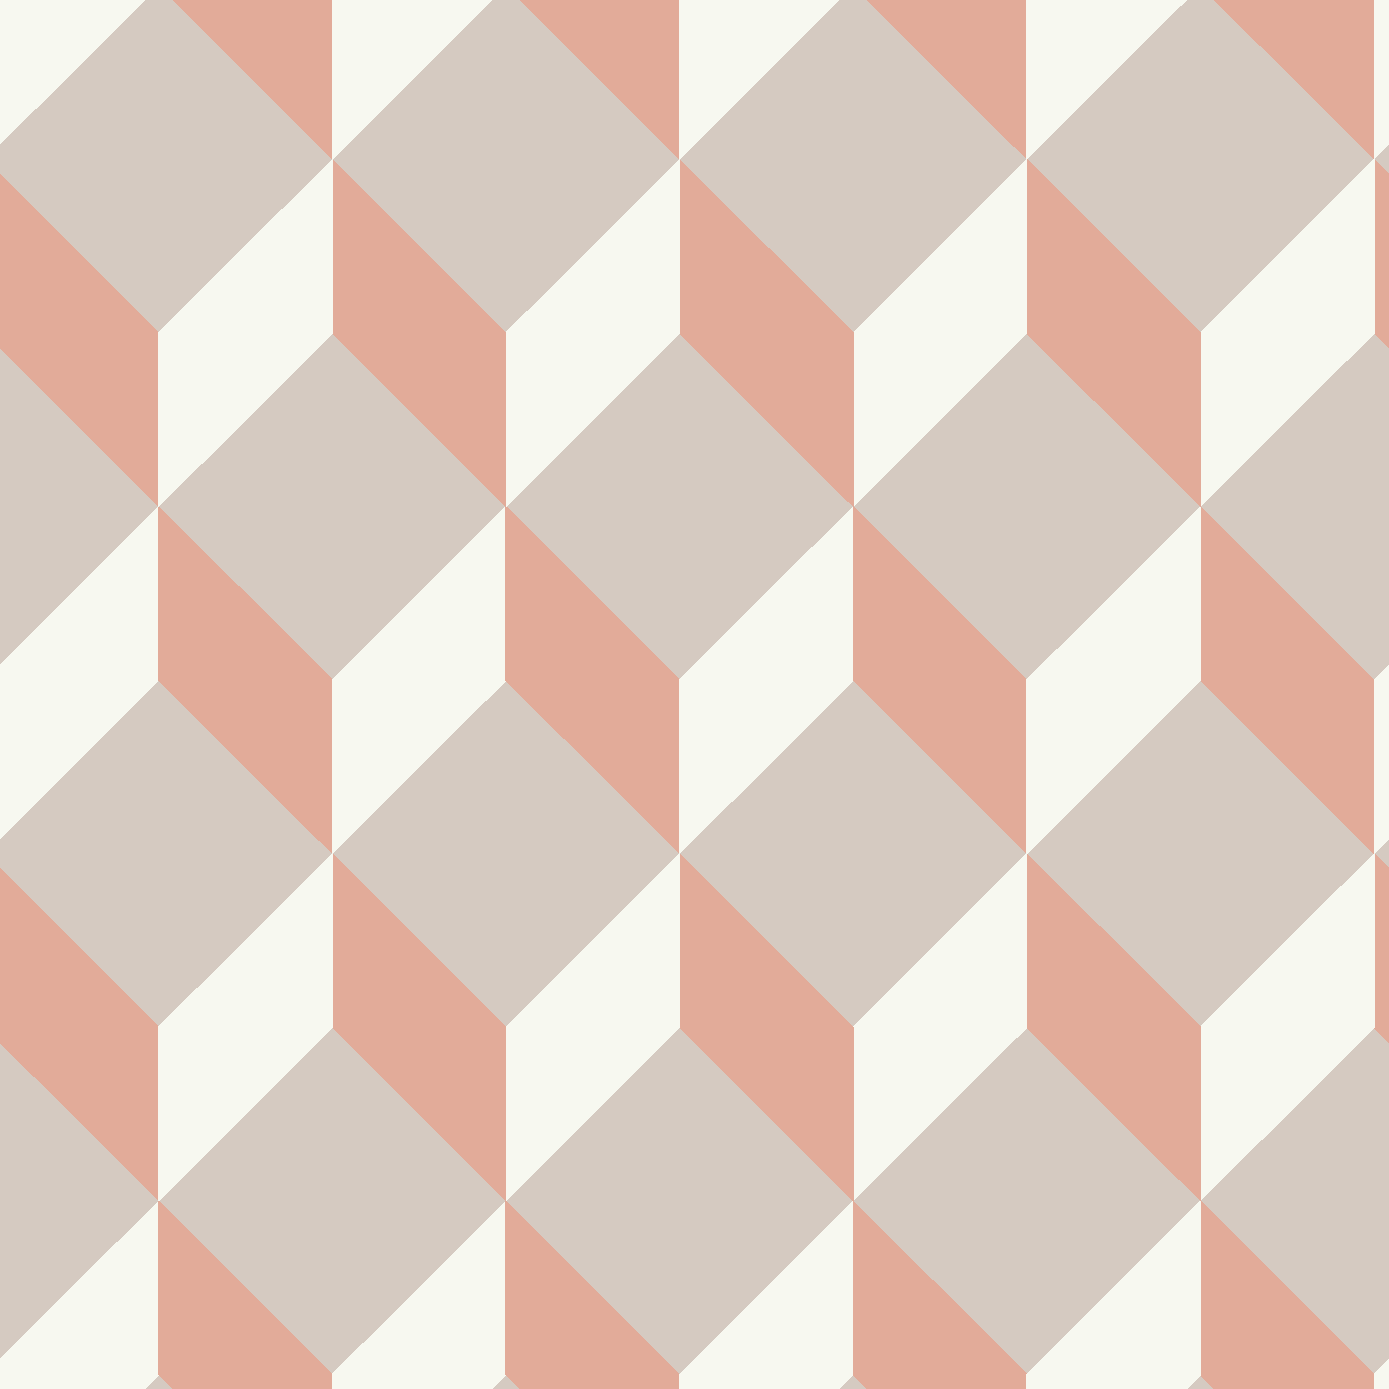 Hypnotizing Rhombs – Pink and Beige